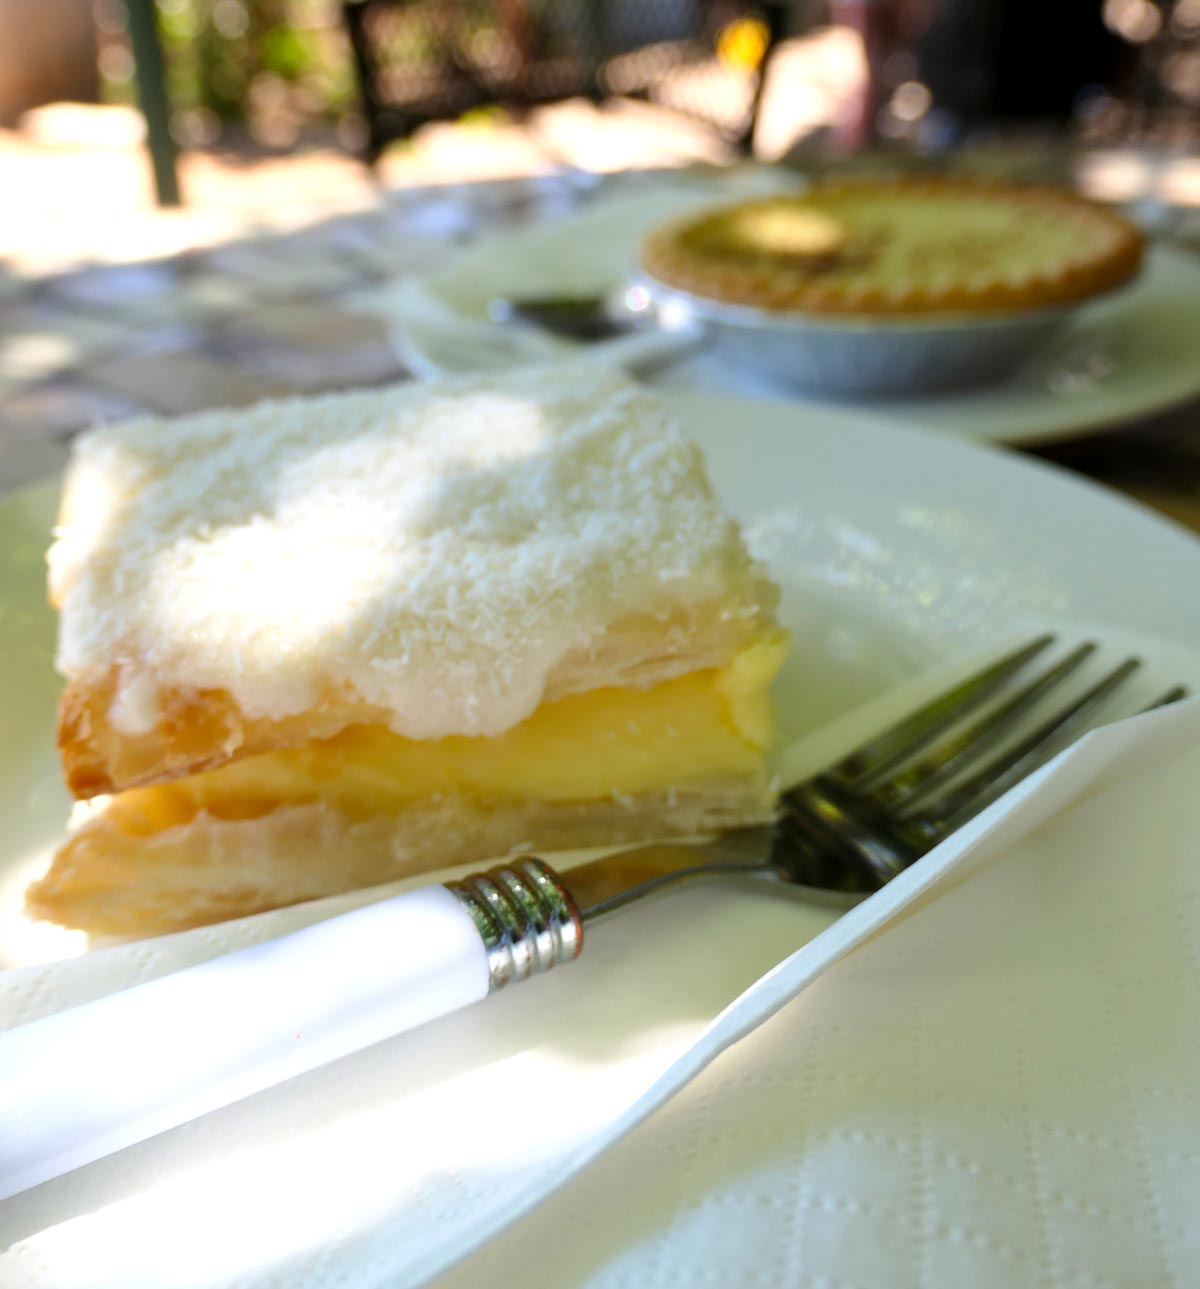 Vanilla slice and custard tart from Stone Hut Bakery, South Australia